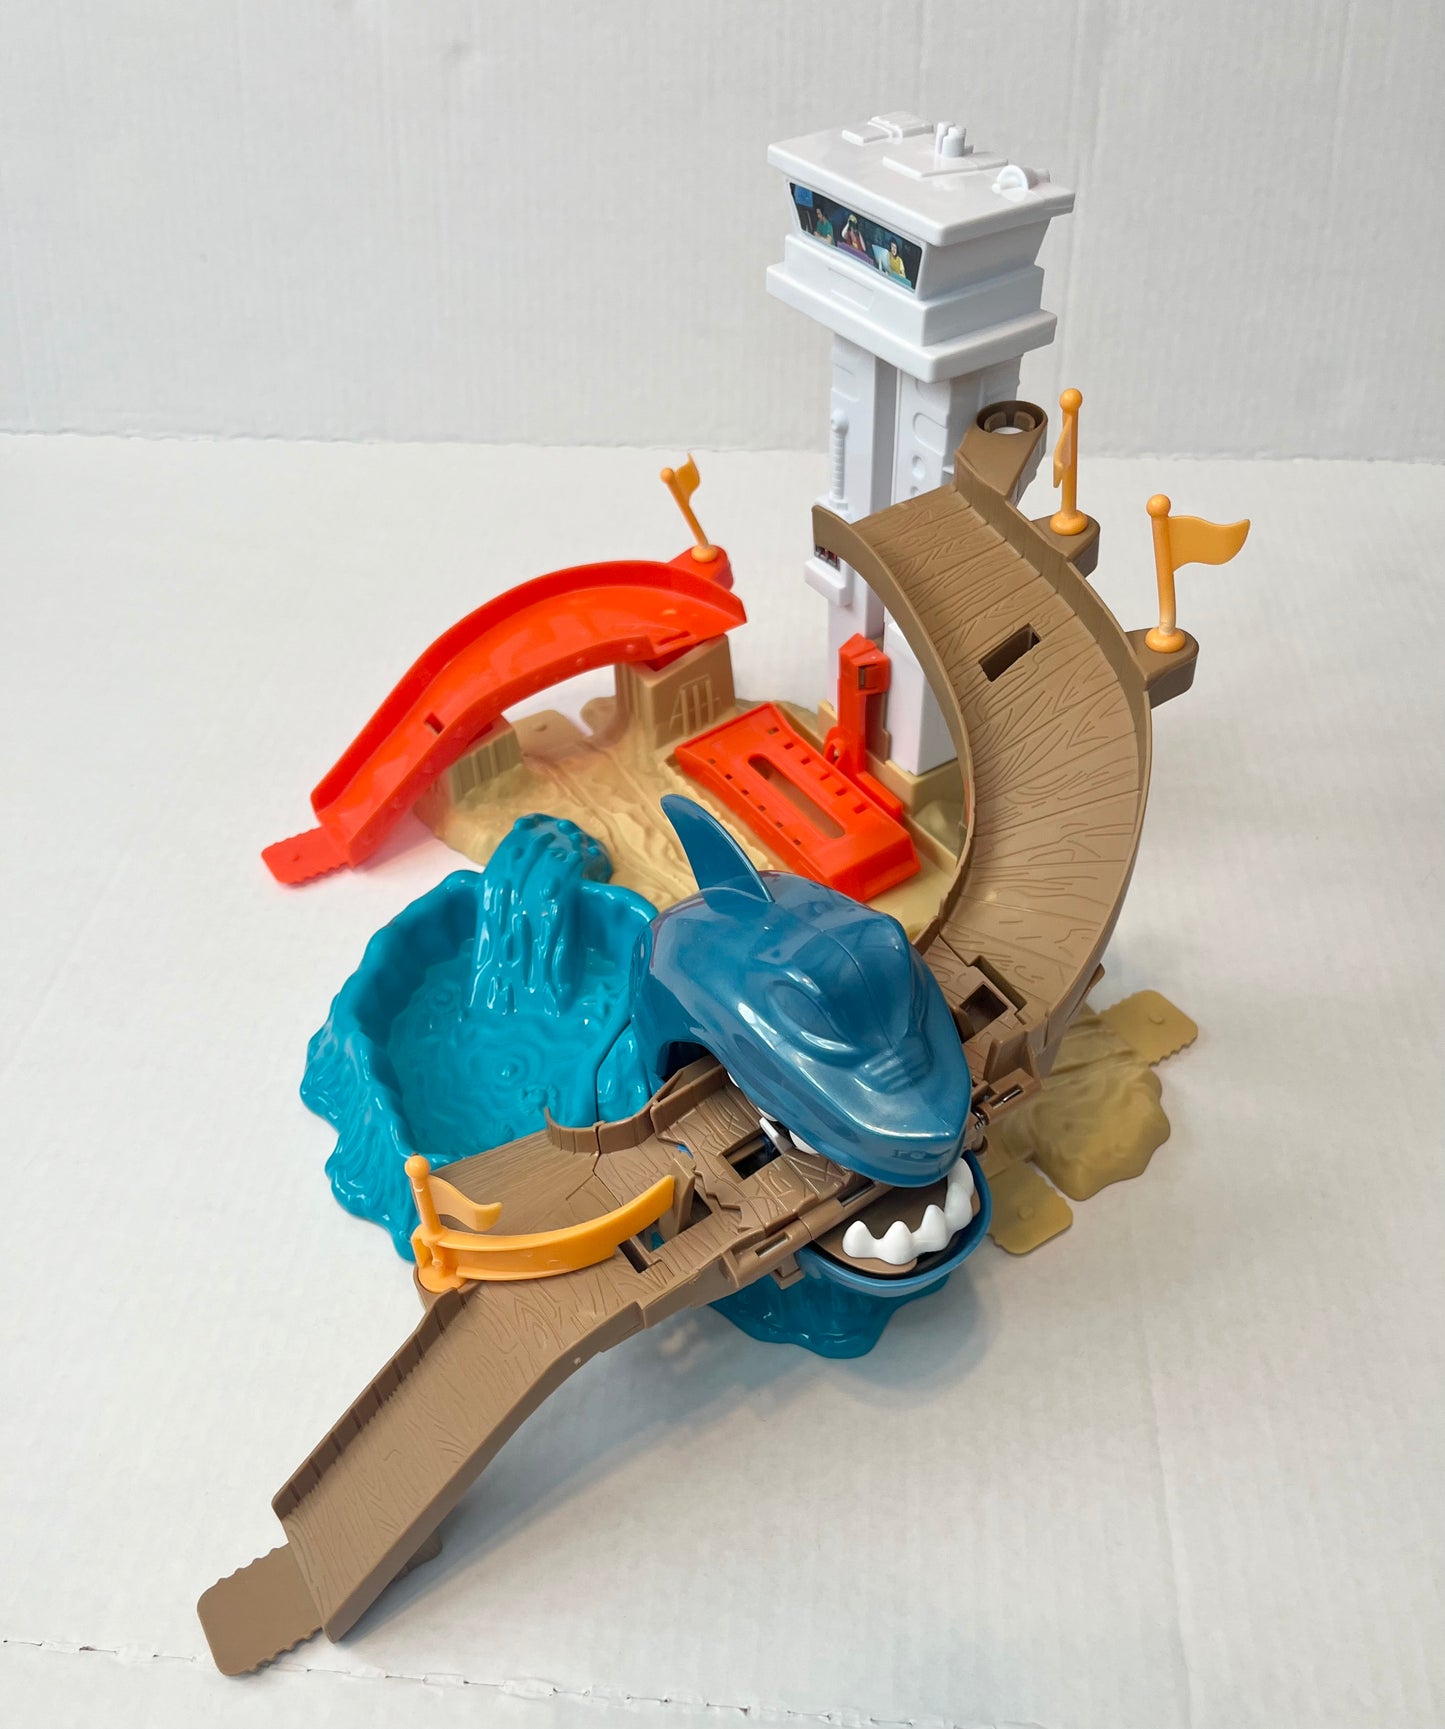 Hot Wheels "Sharkport Showdown" Toy Car Track Set